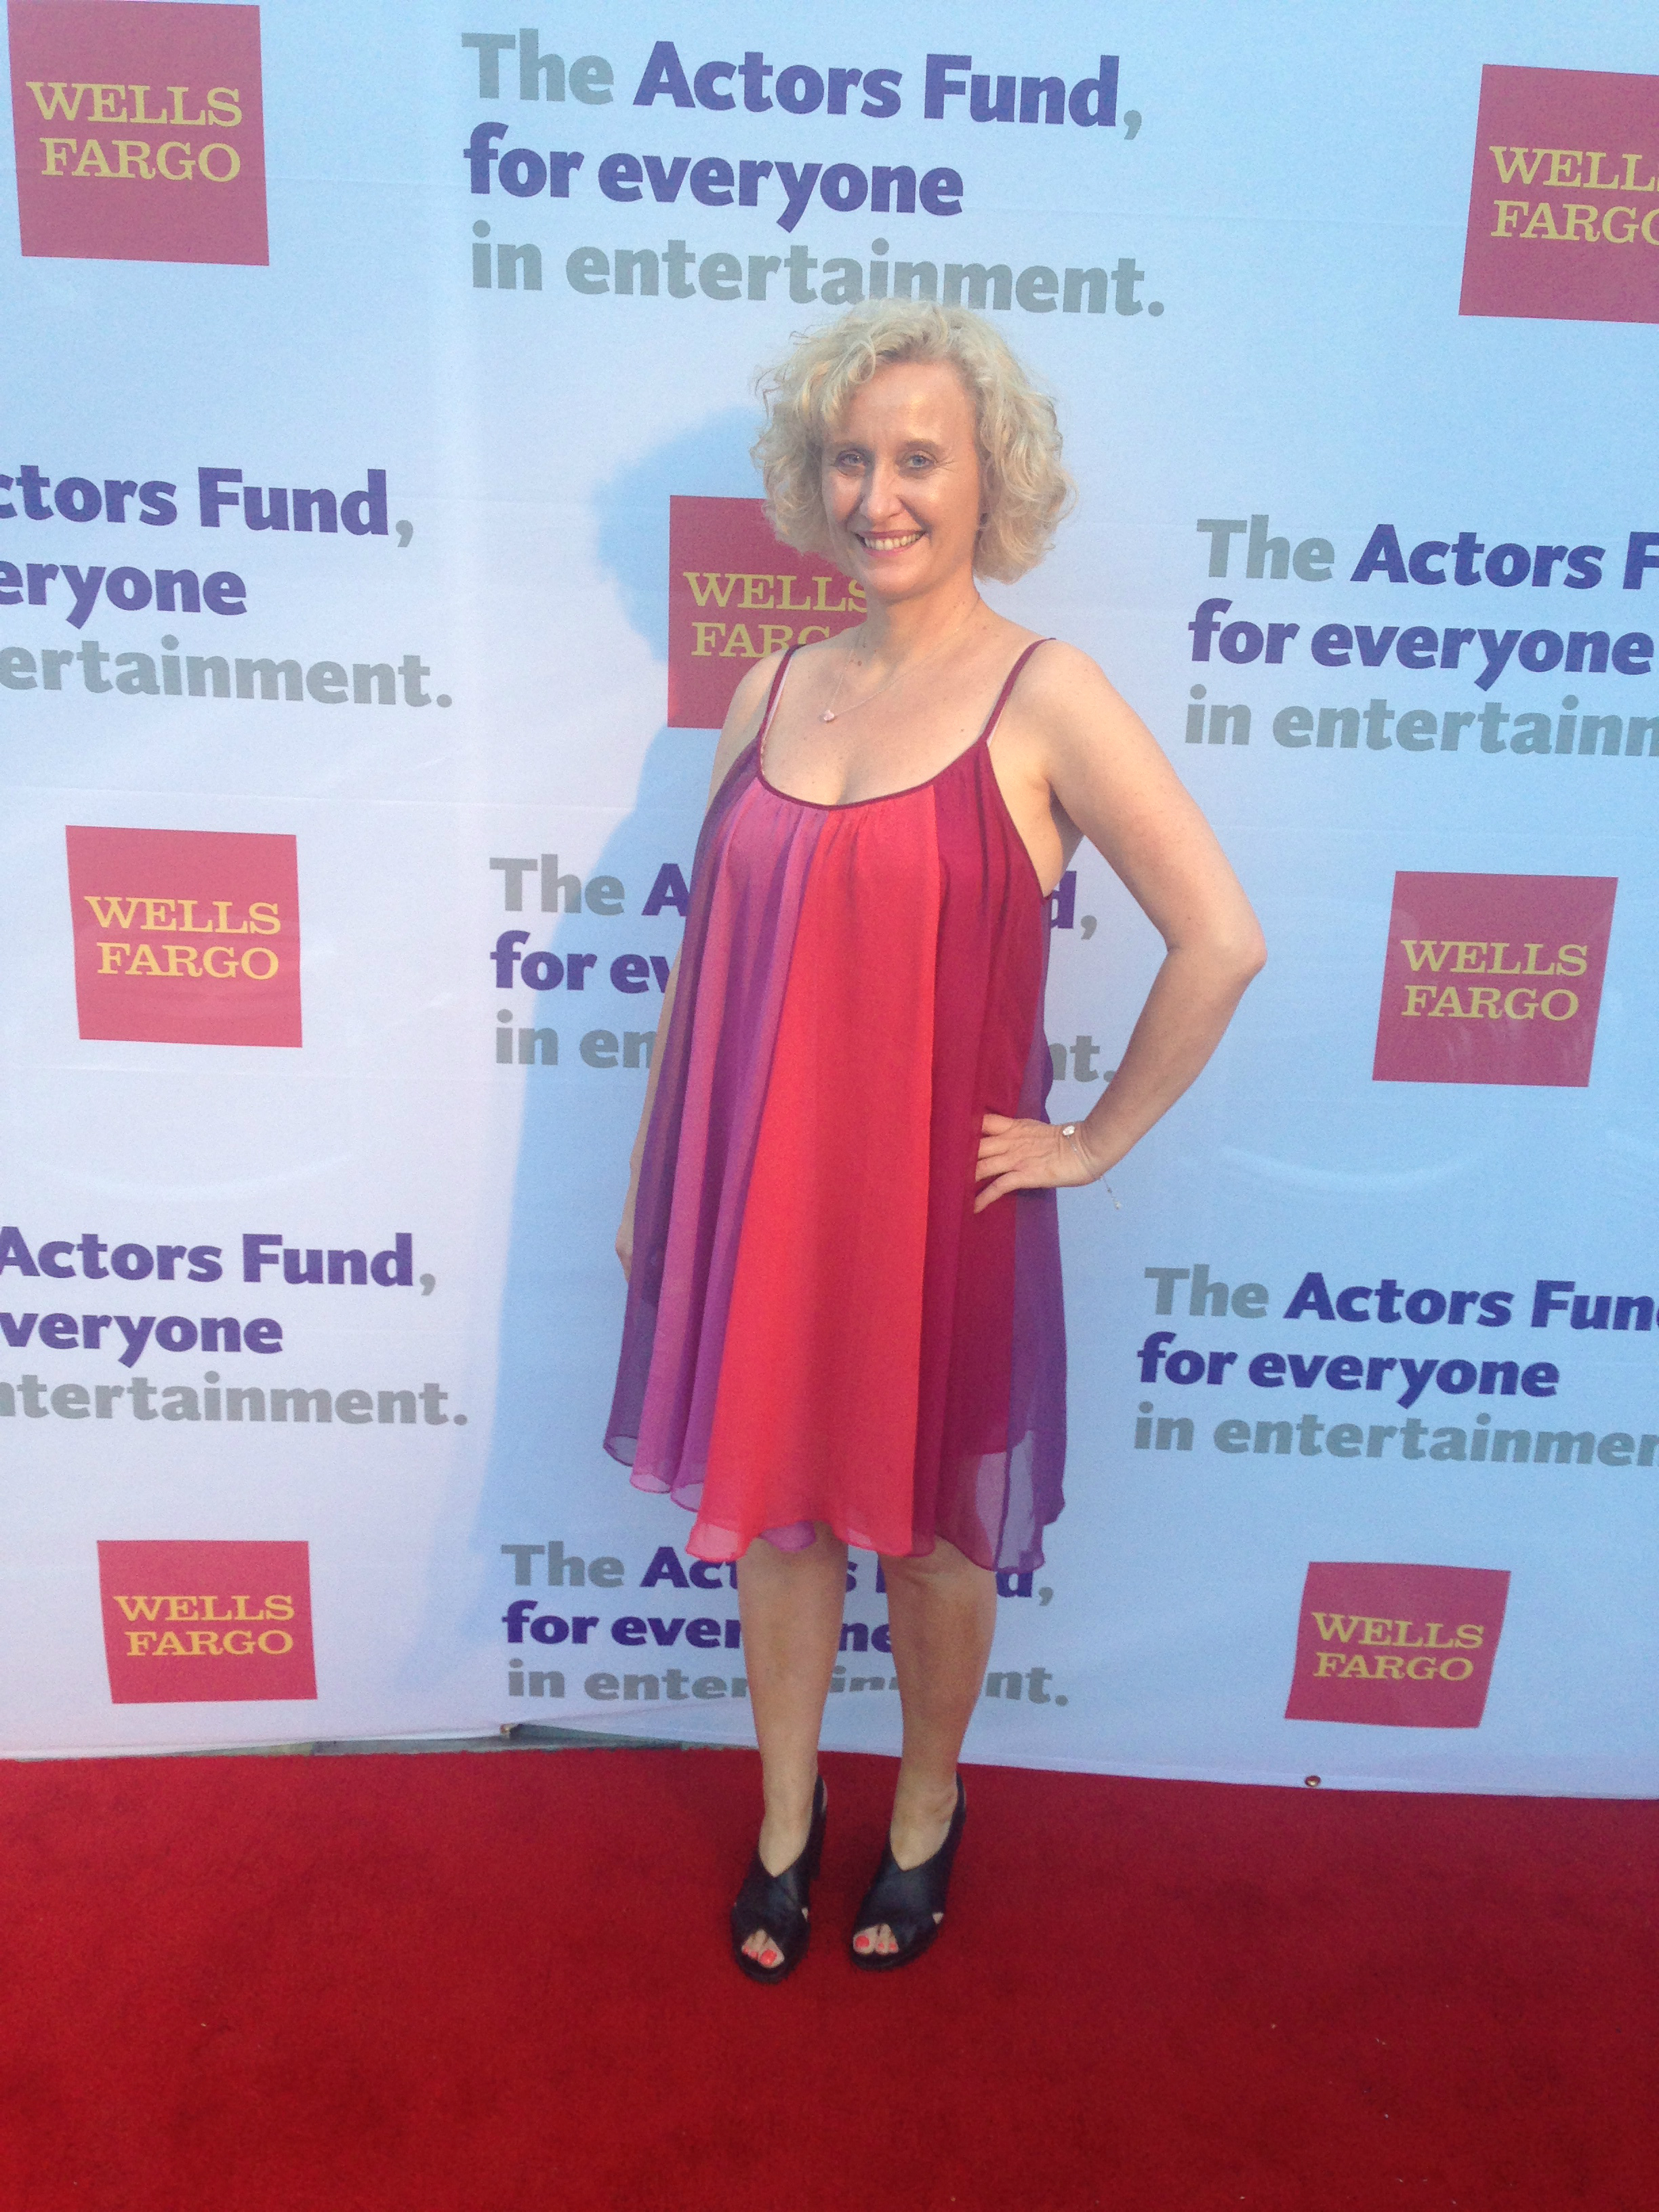 Red Carpet Actors Fund Tony awards party, Los Angeles